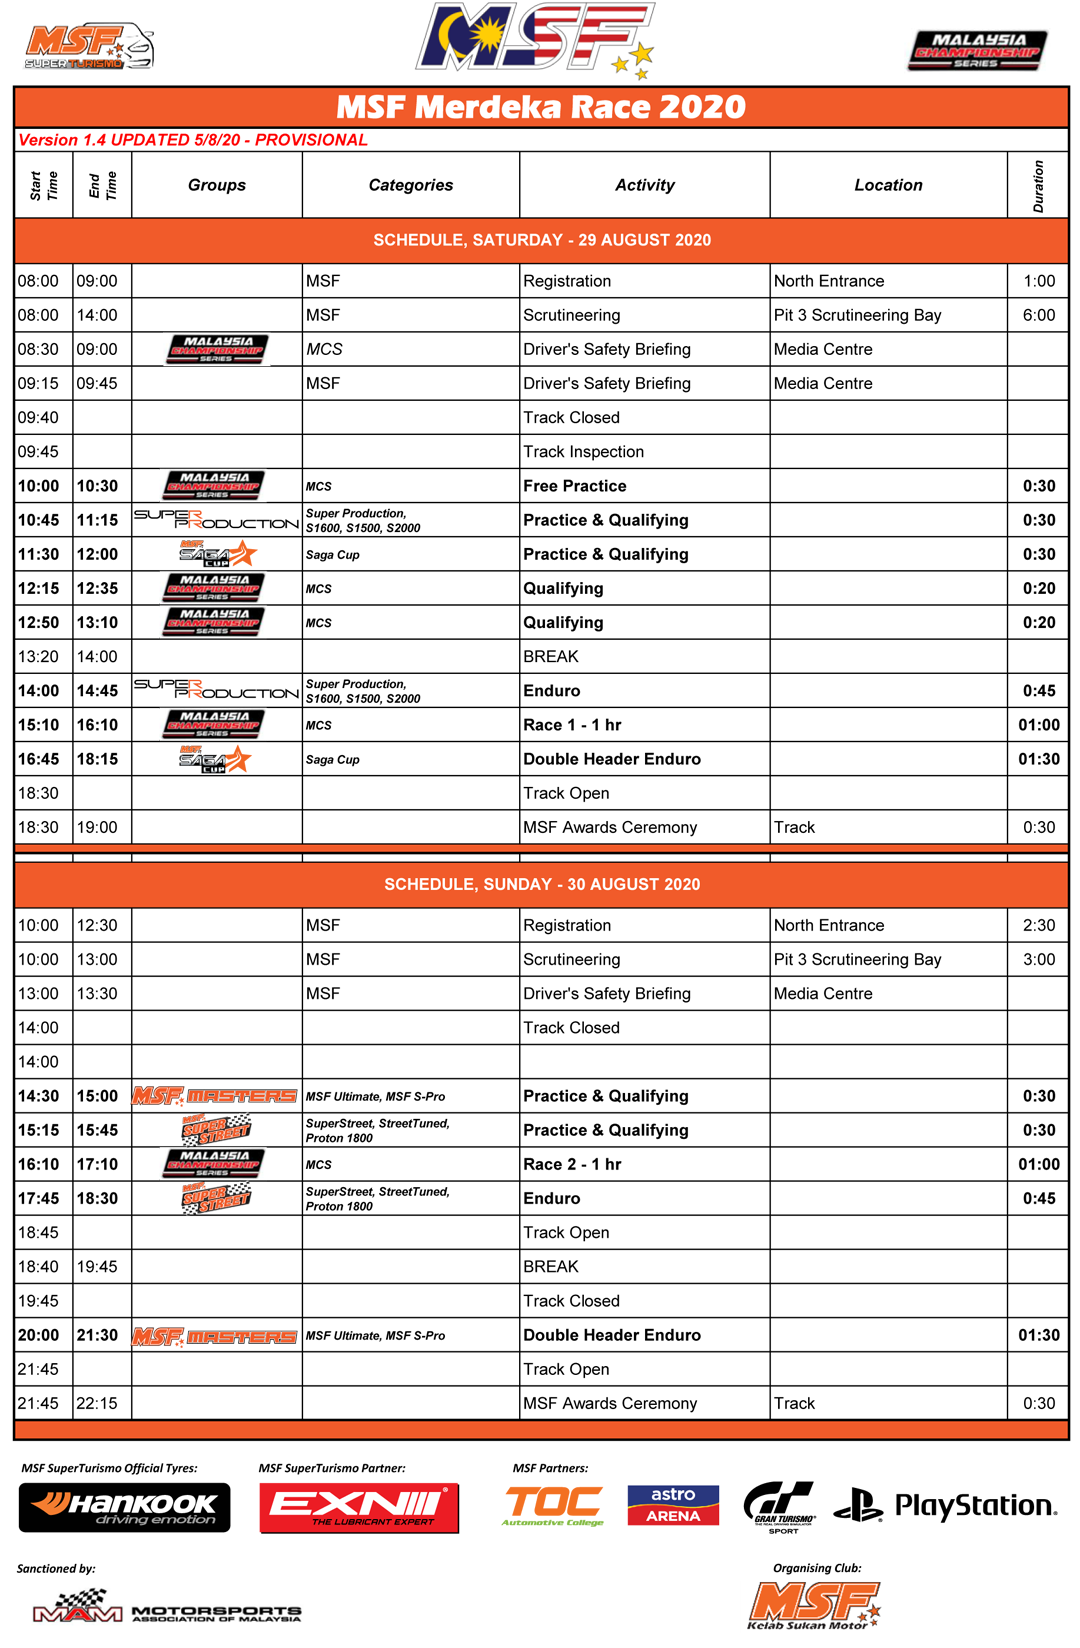 Merdeka Race 2020 – Event Schedule